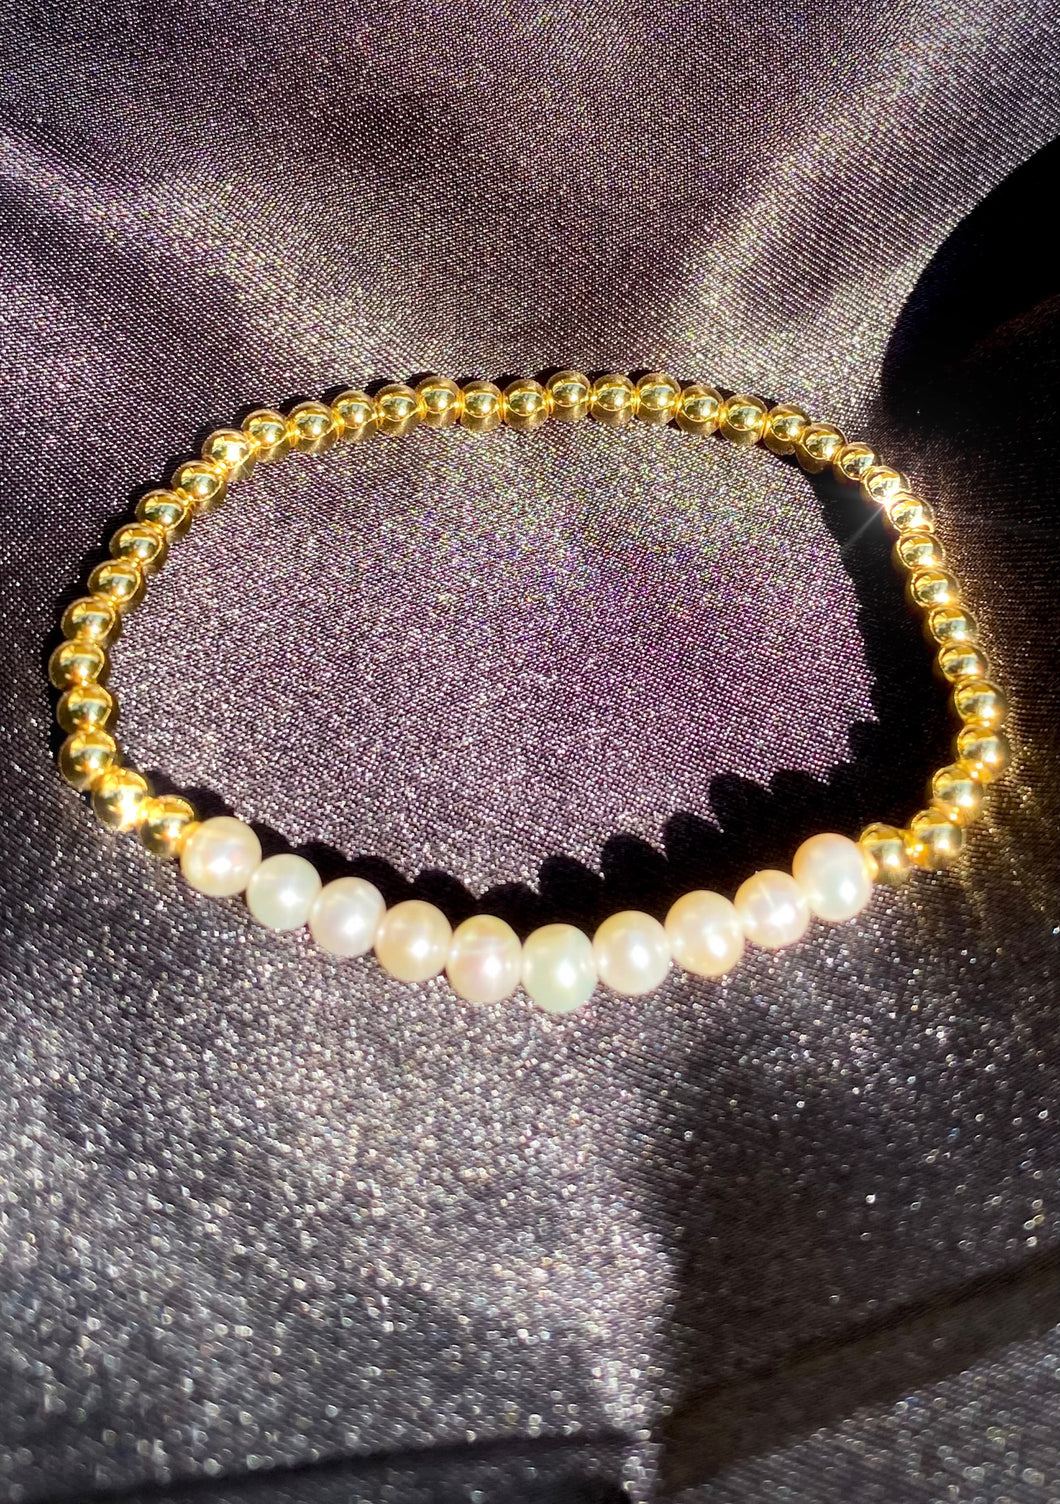 14k Pearl Bead Bracelet